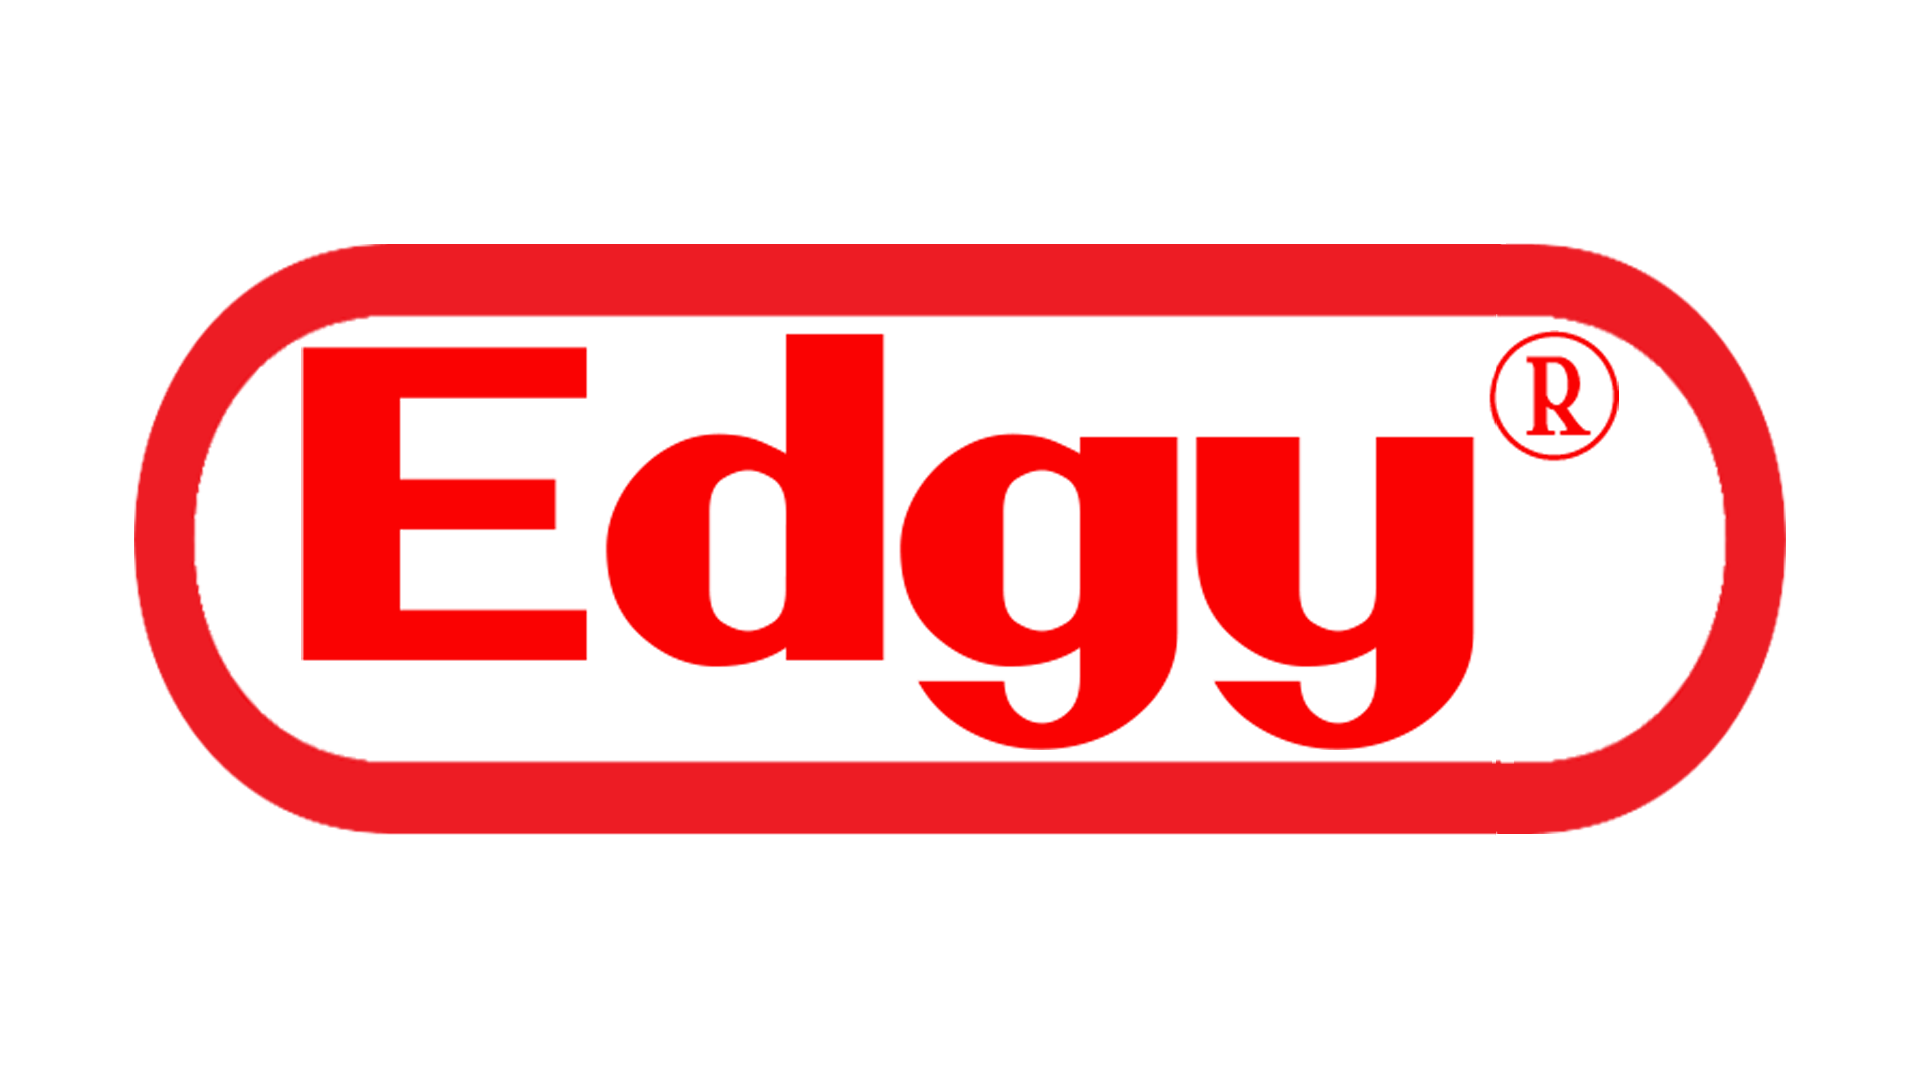 edgy_nintendo_logo_by_jackcycling-daecf5o.png